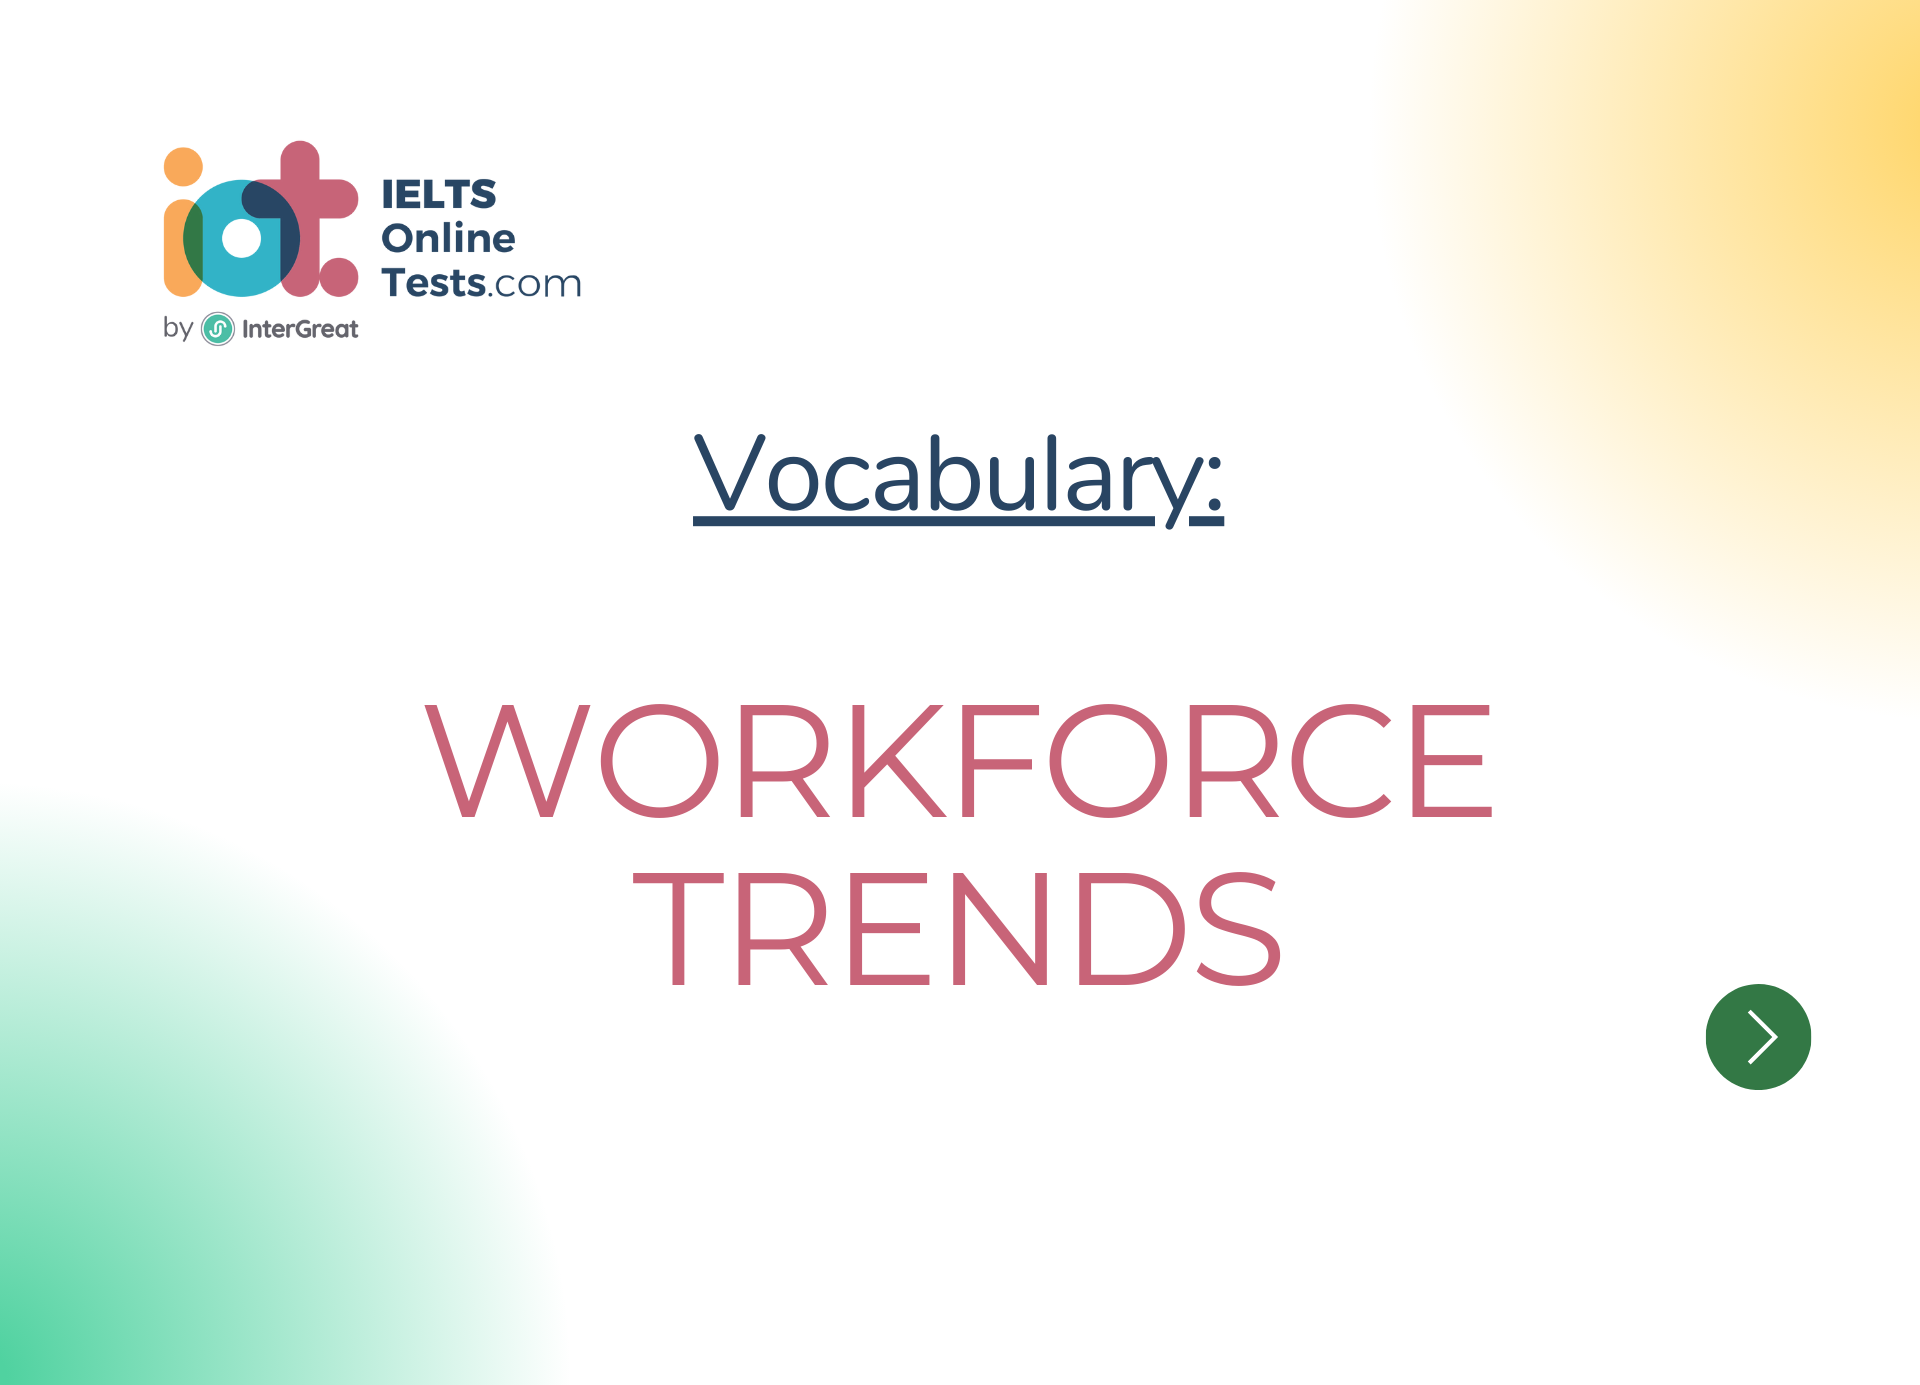 Workforce trends